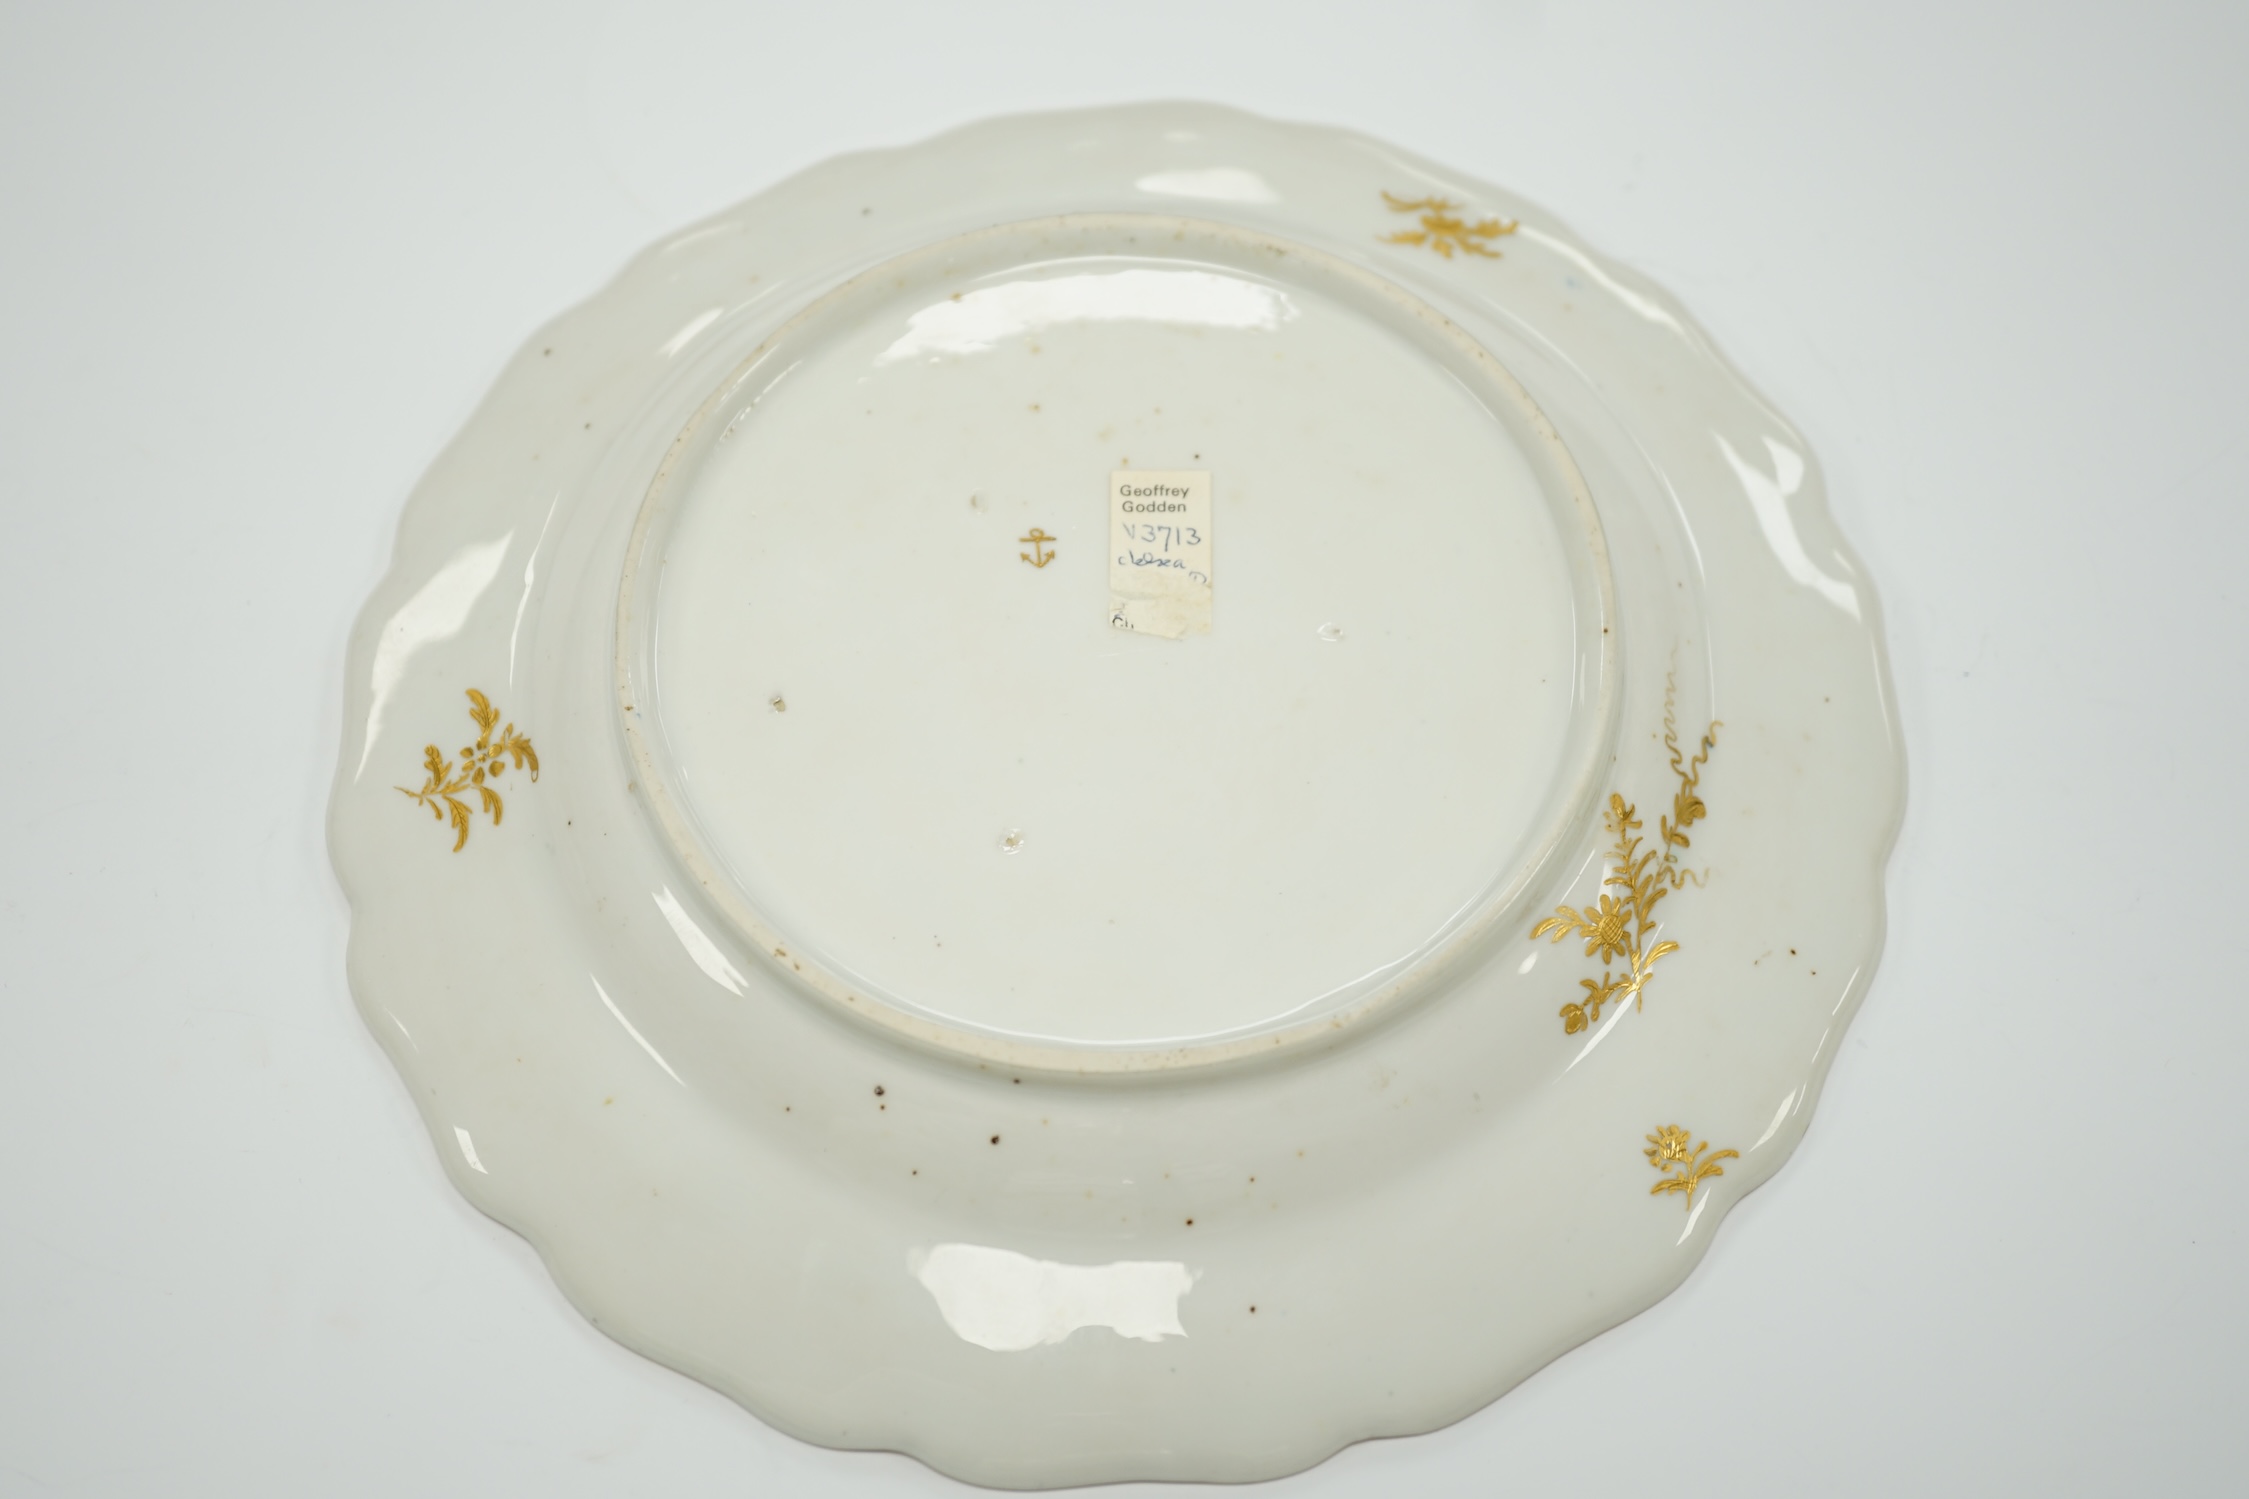 A Chelsea gold anchor ‘fantastic birds’ plate, c.1760-65, 21cm diameter, ex Godden collection